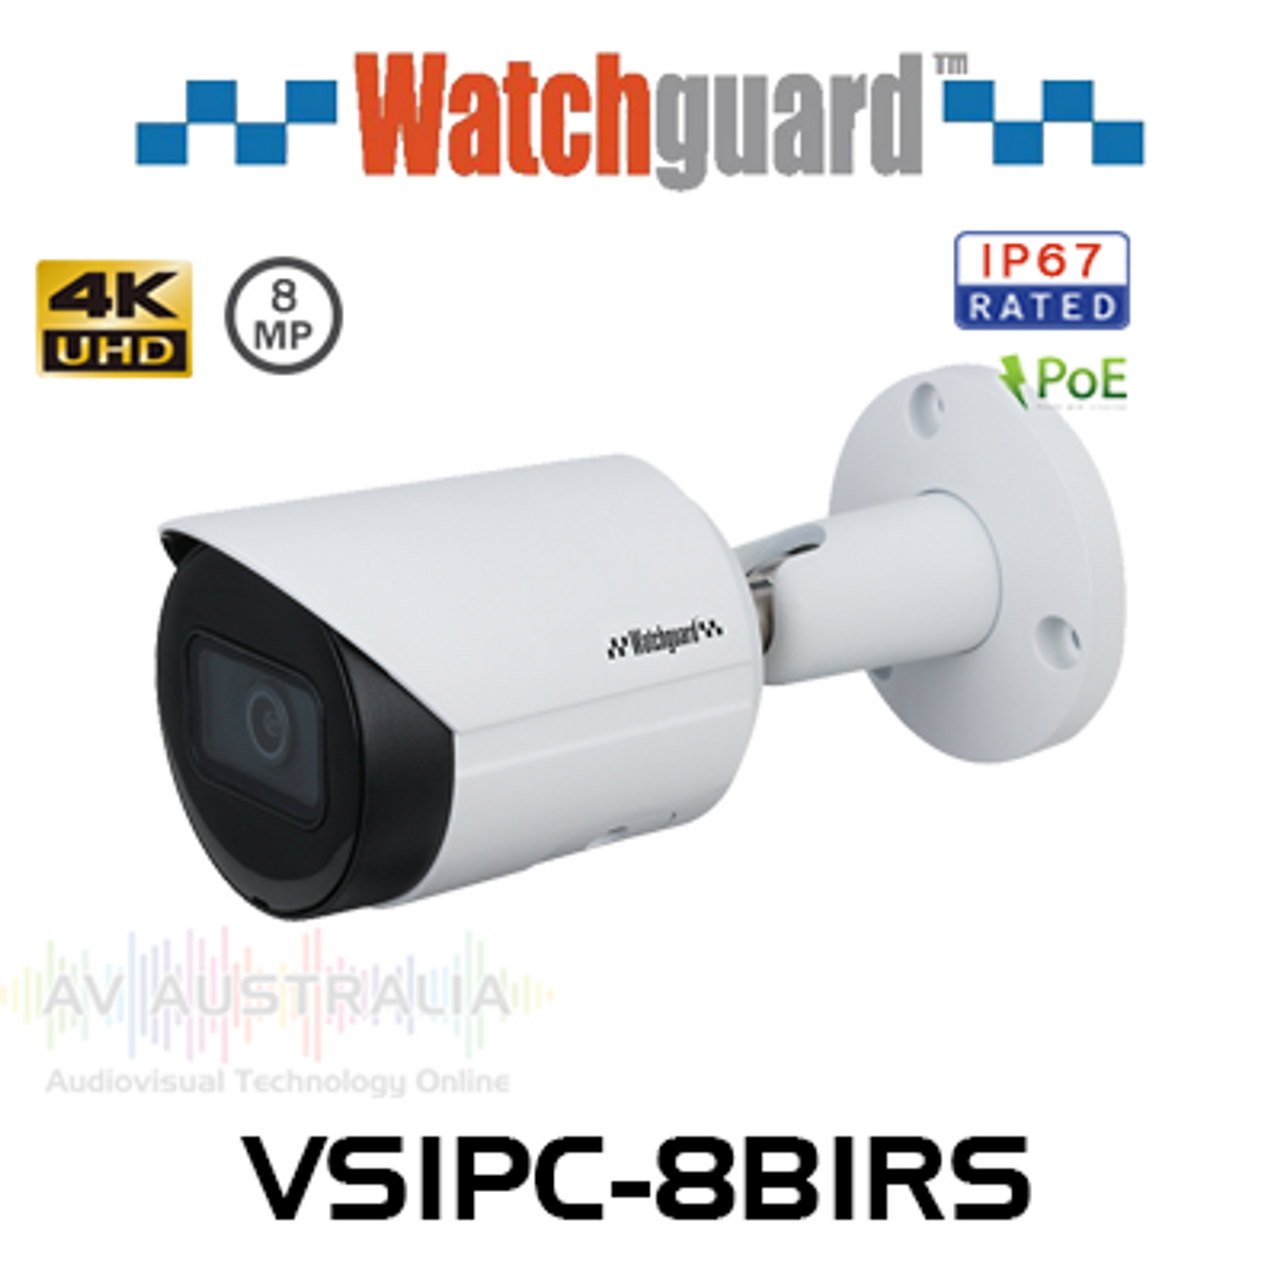 Watchguard Compact 8MP Fixed IP67 Mini Bullet IP Camera